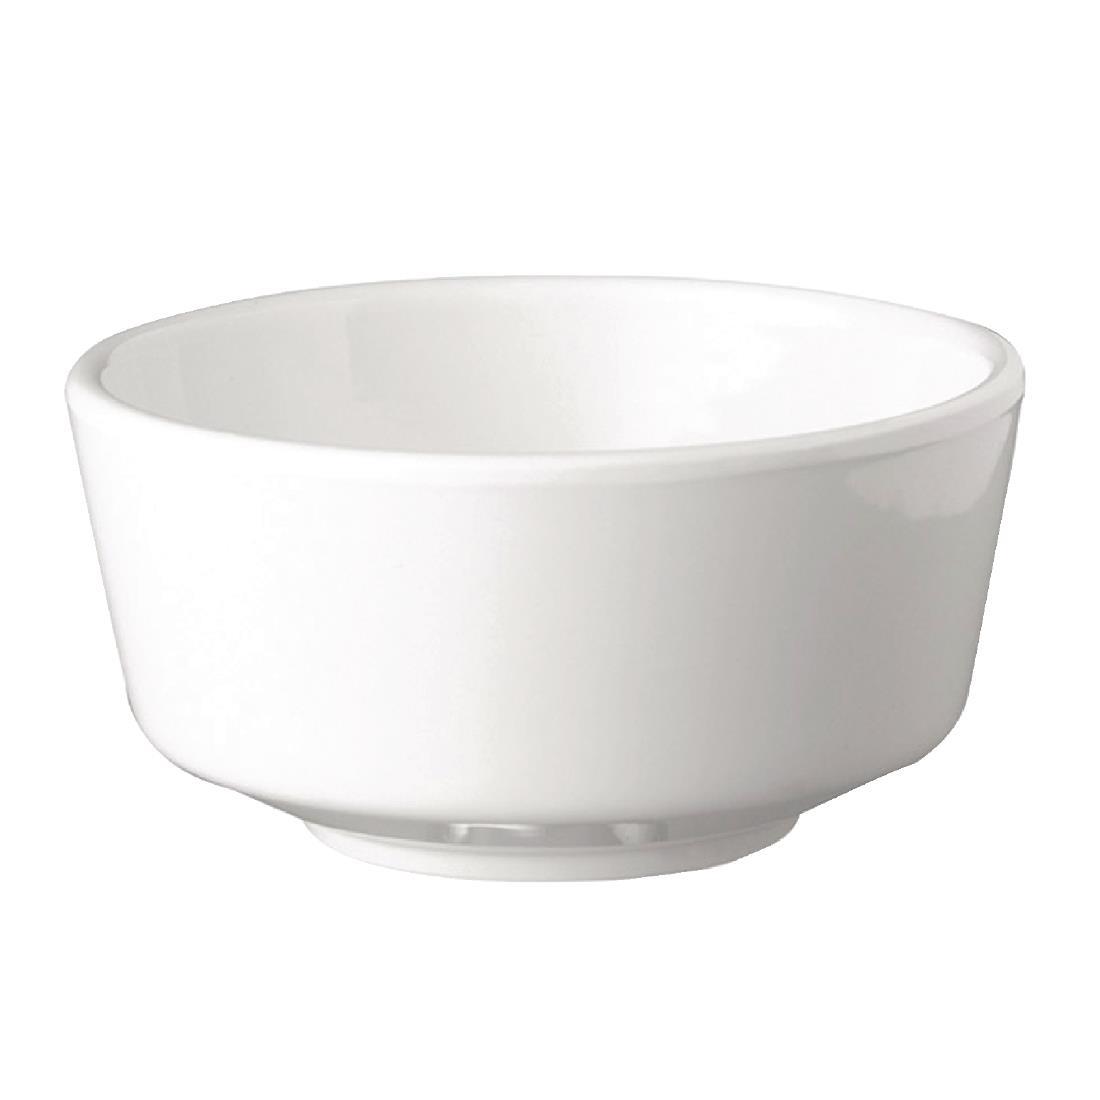 APS Float White Round Bowl 8in - GF088  - 1